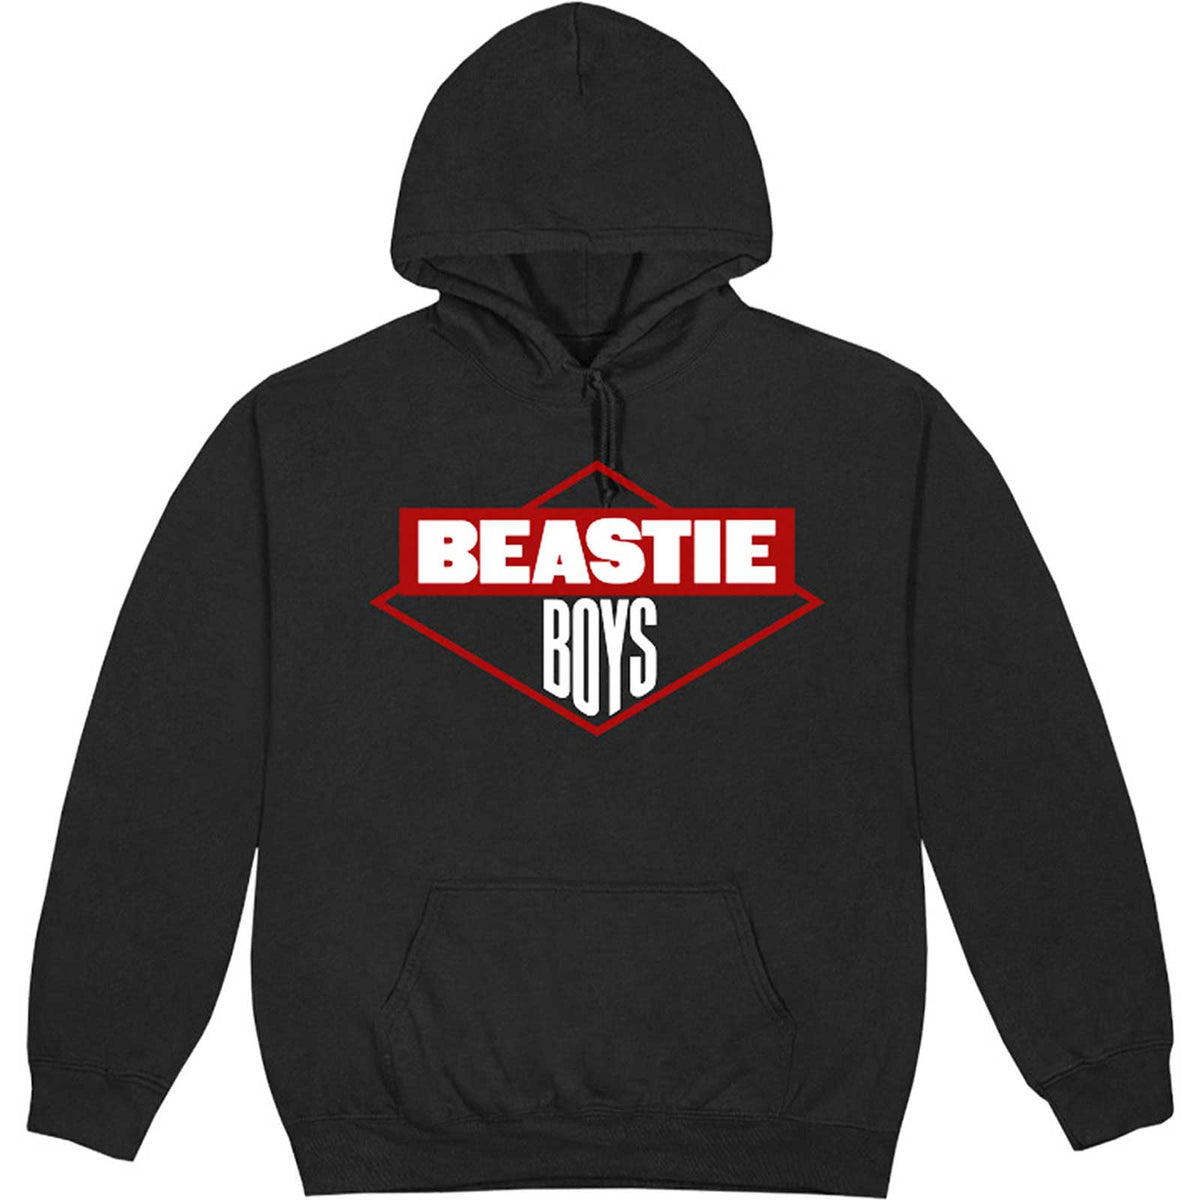 The Beastie Boys Unisex Hoodie - Diamond Logo - Black Official Licensed Design